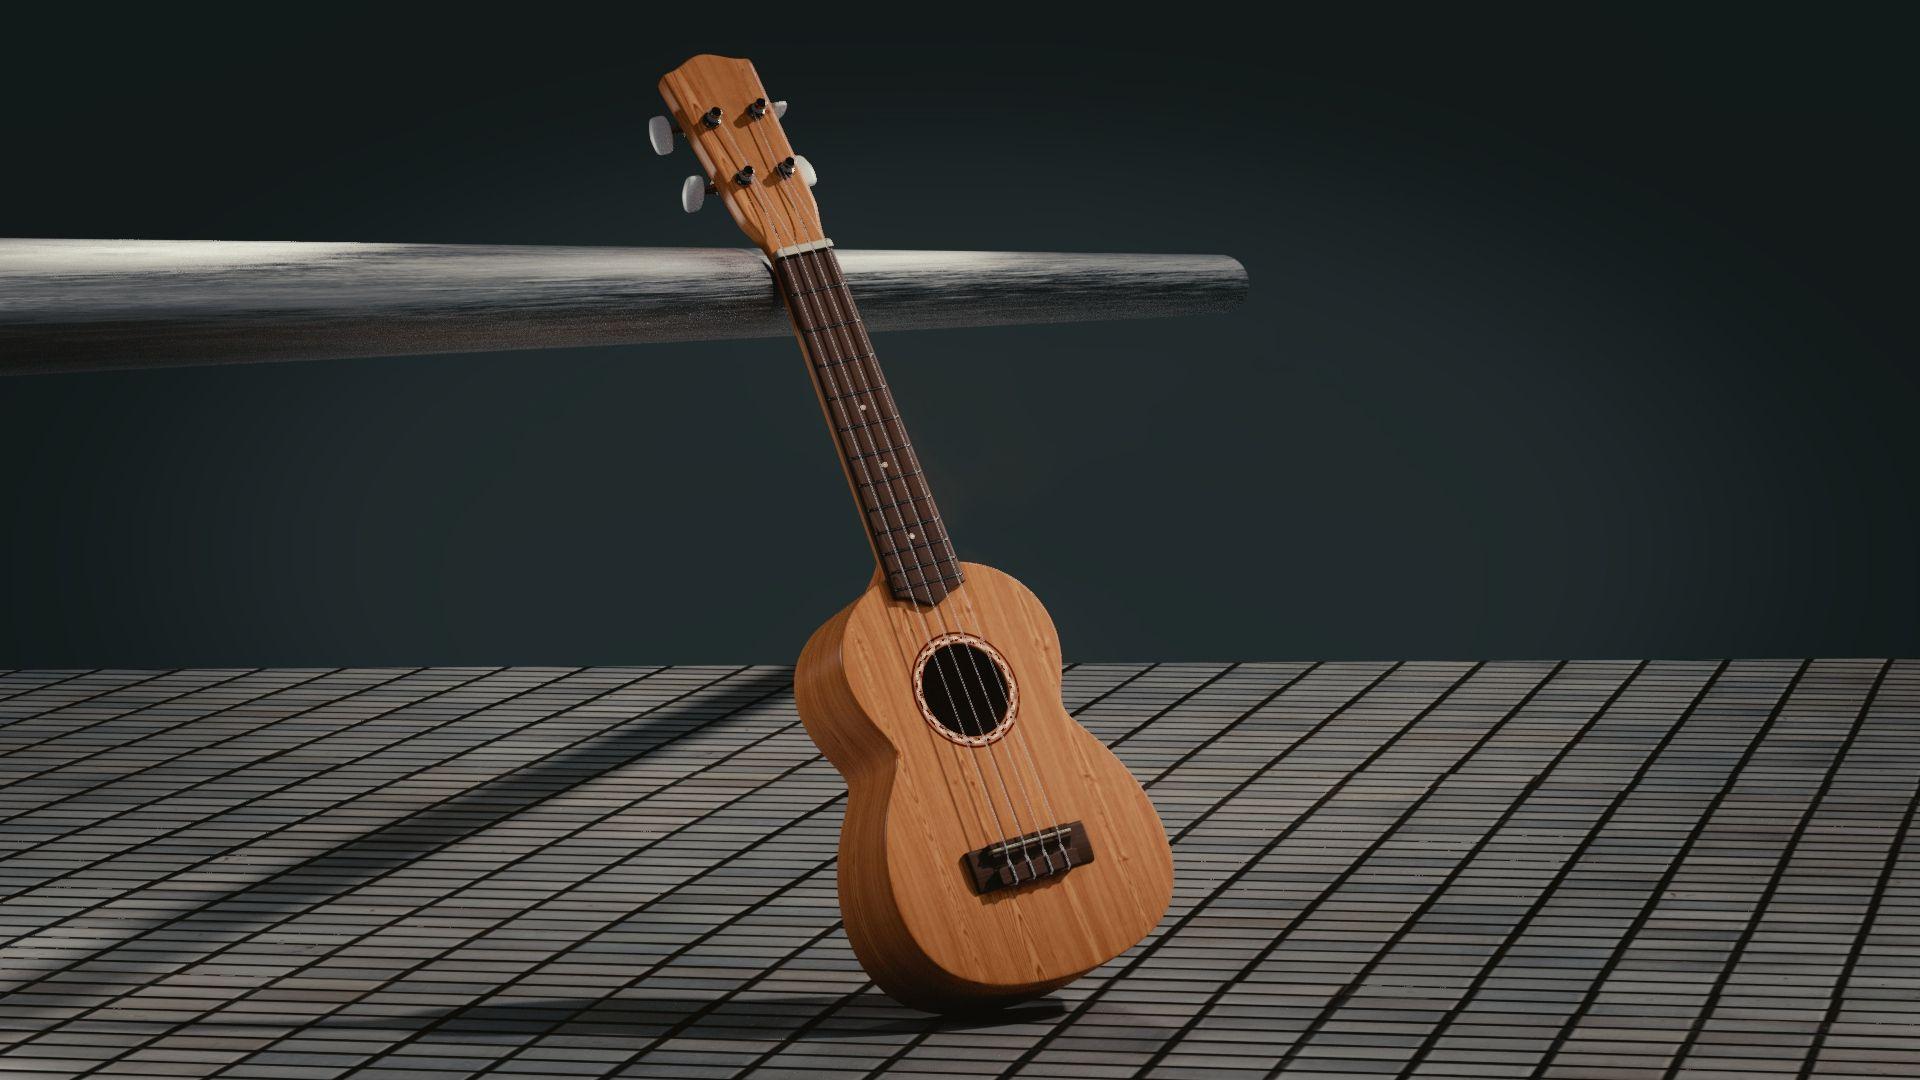 Download wallpaper 1920x1080 guitar, 3D, space, musical instrument